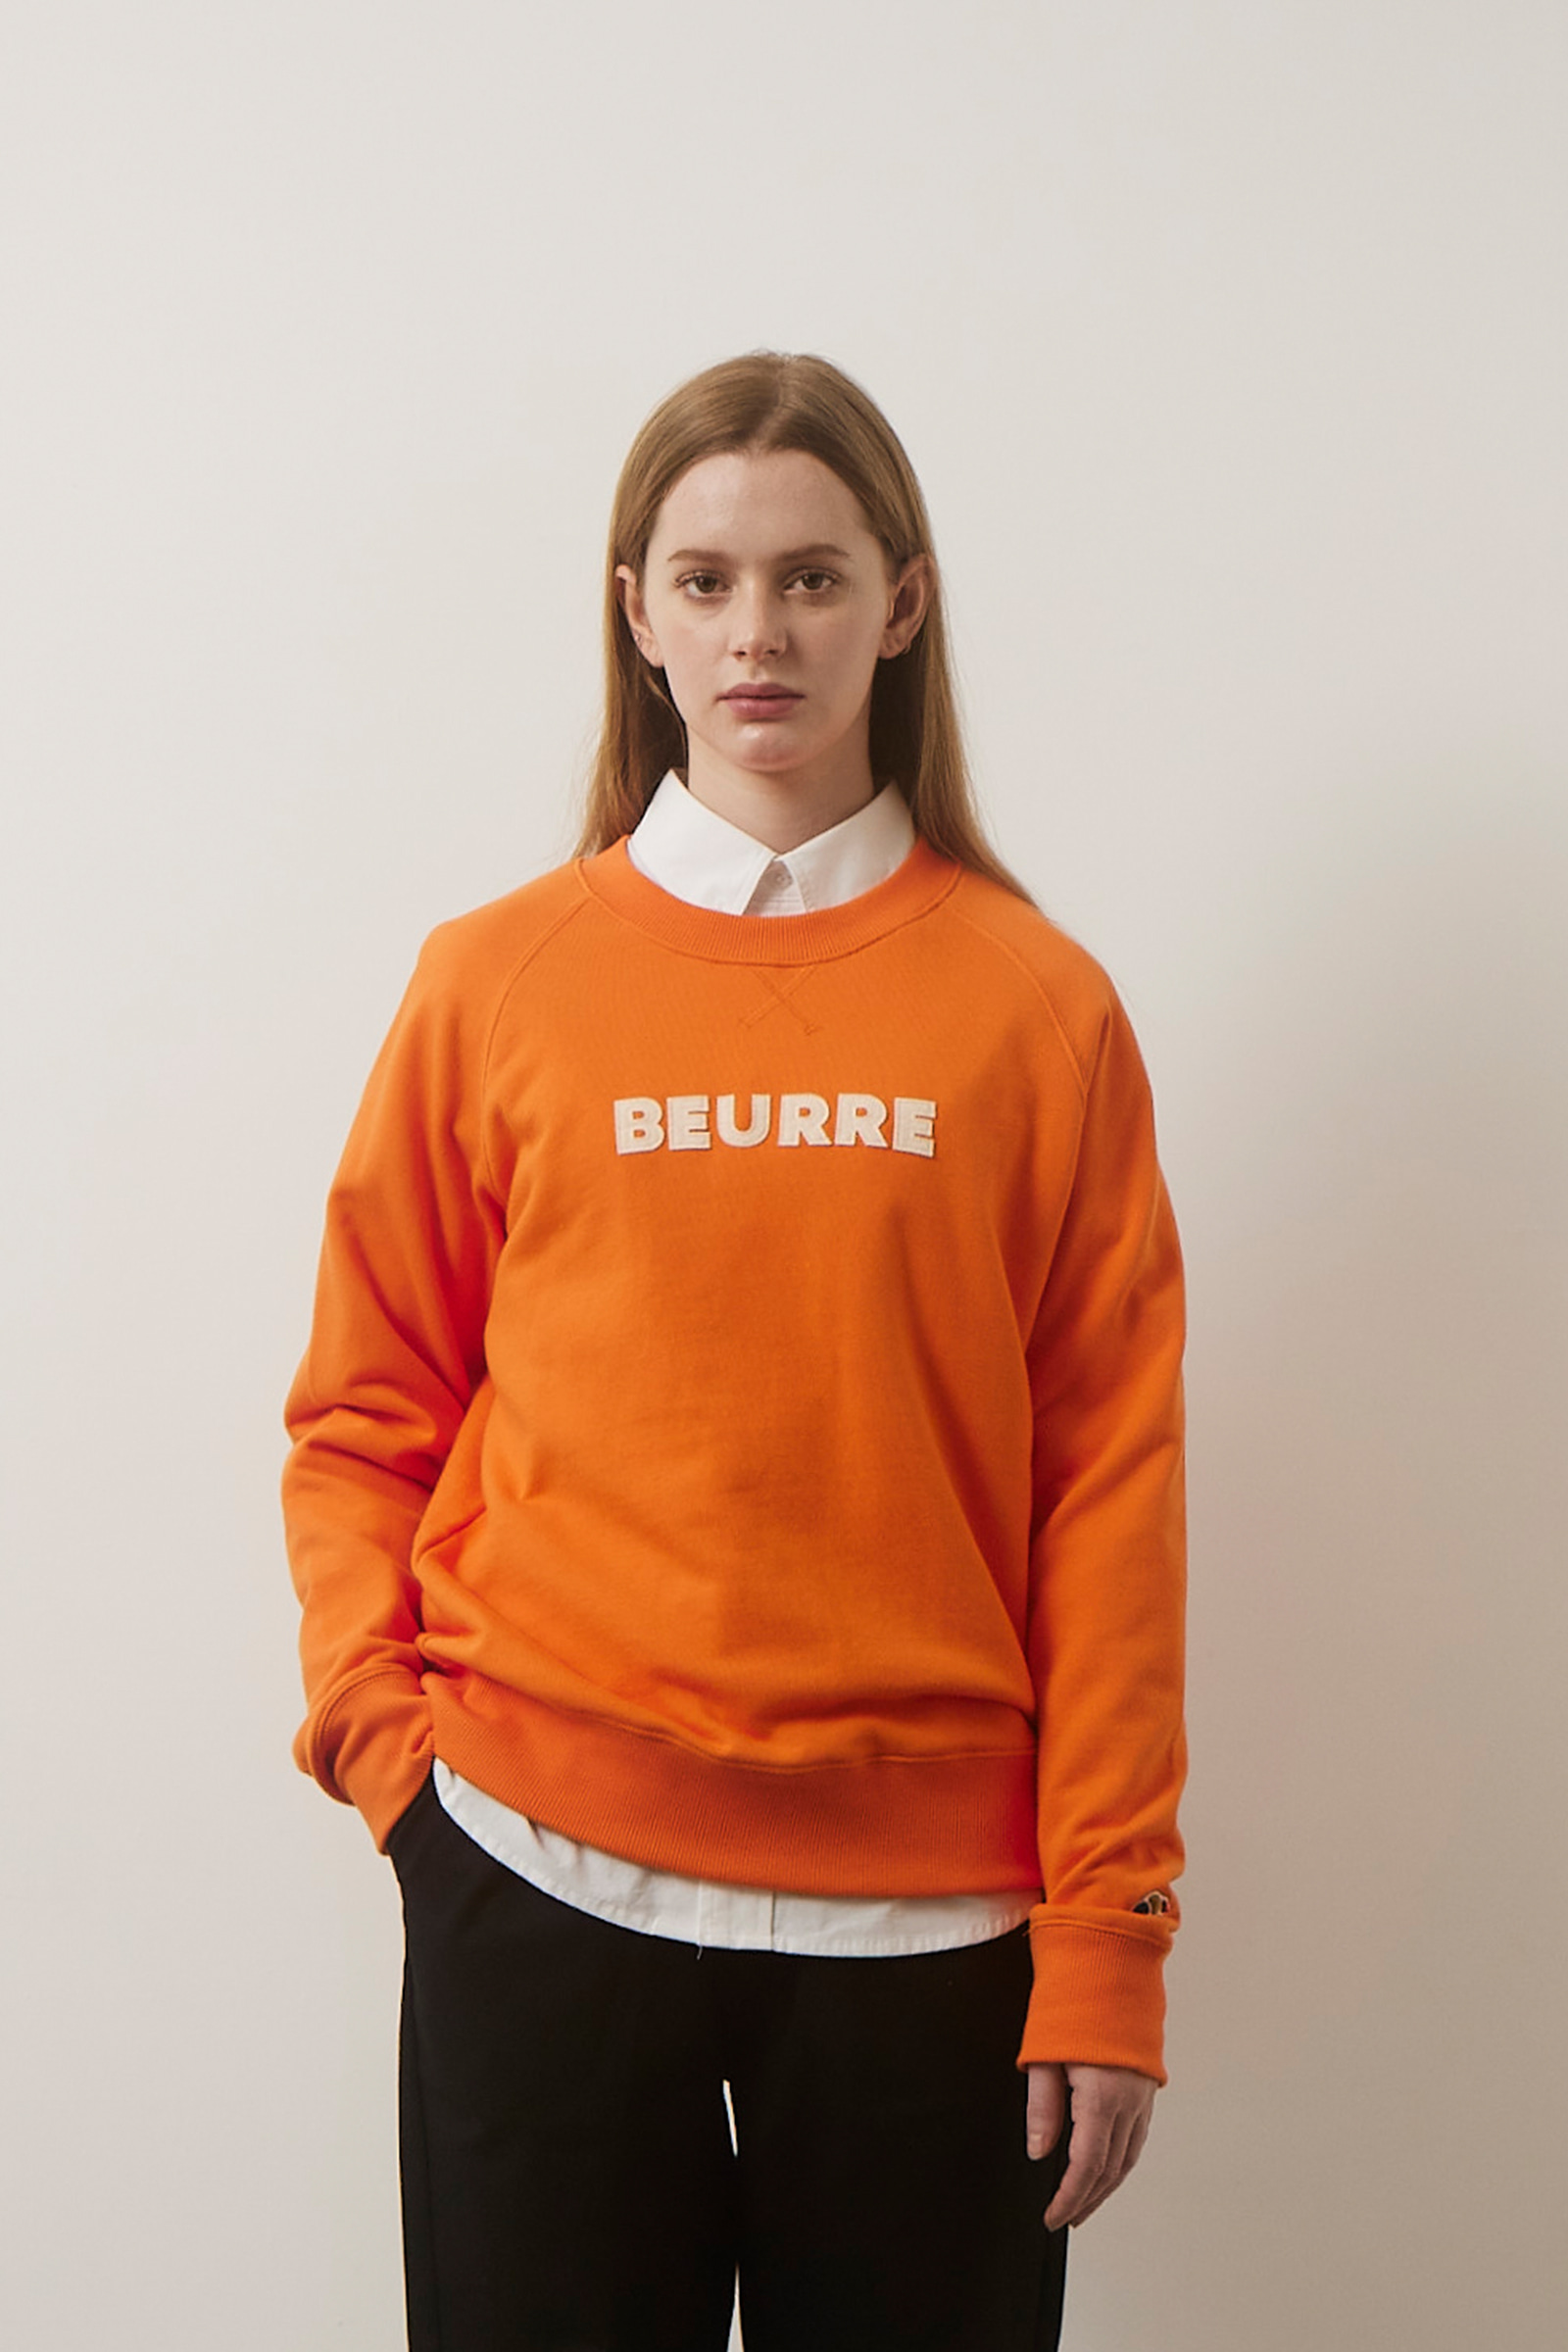 ep.5 Beurre Sweatshirts (Orange)